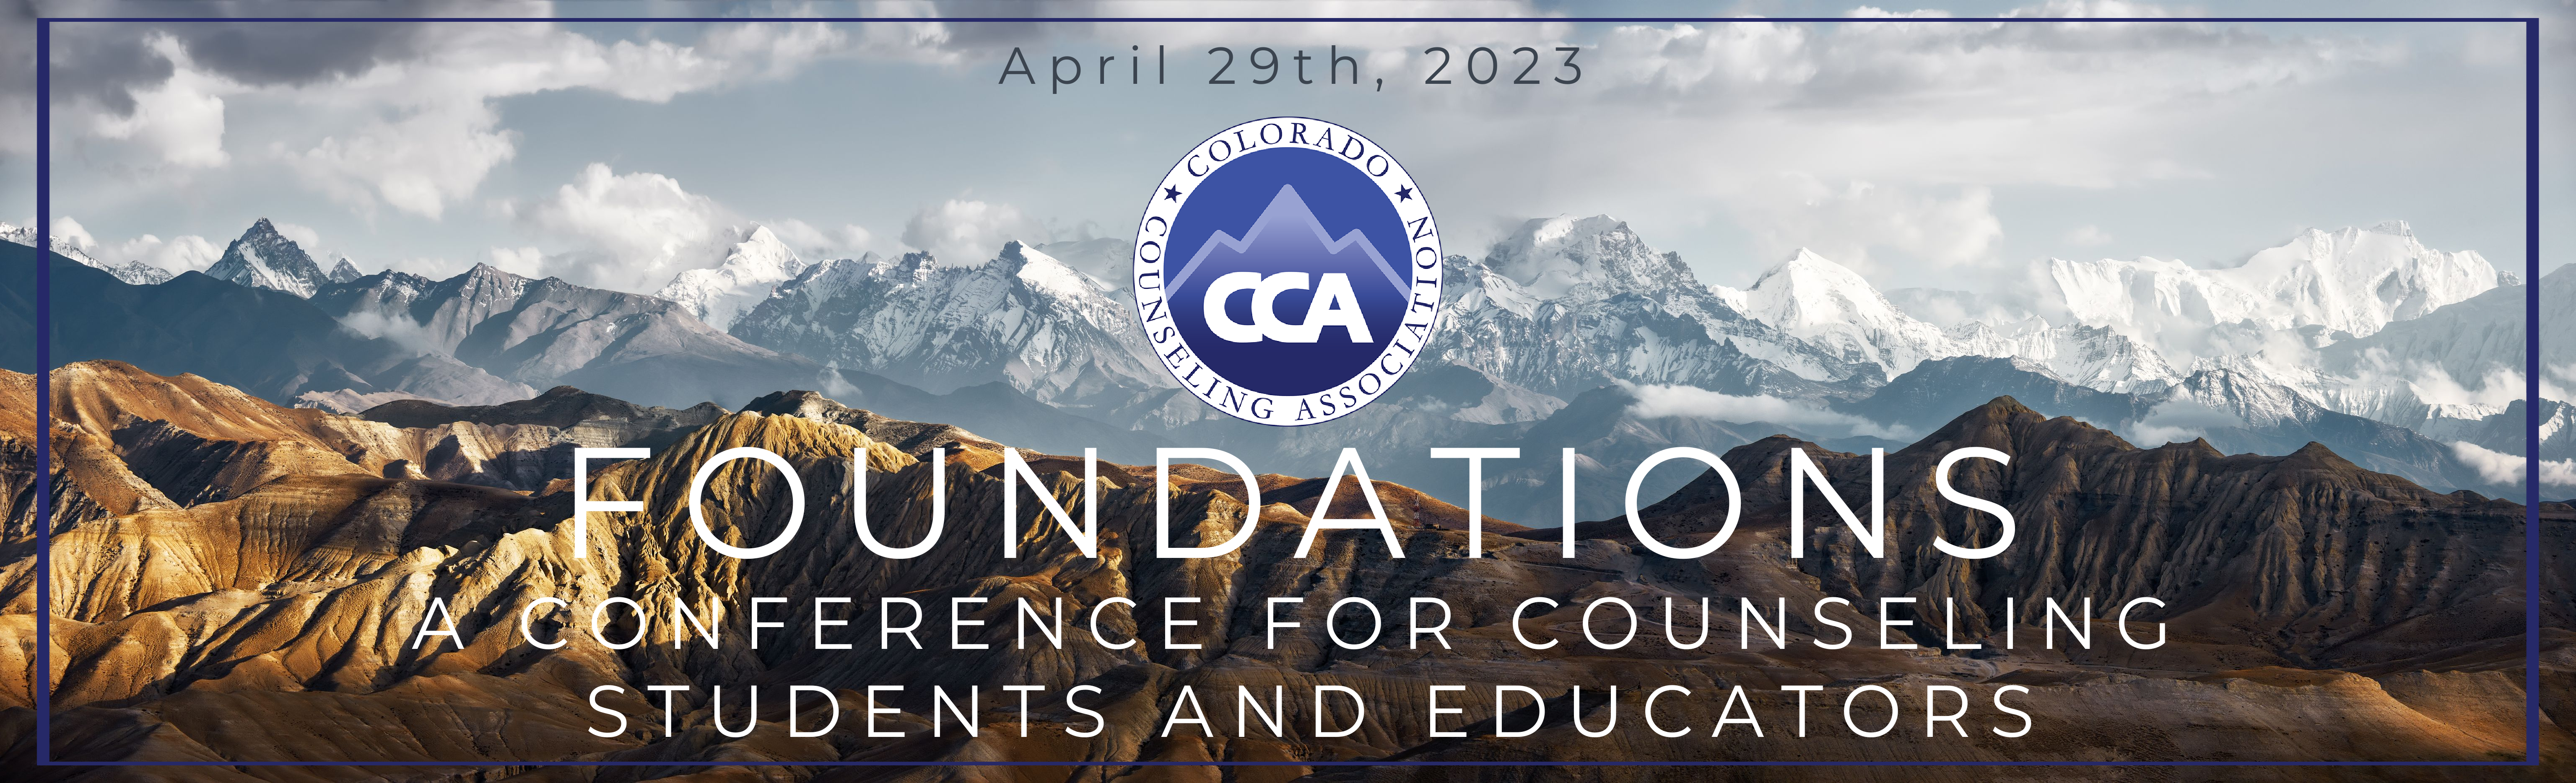 Colorado Mountain Meetings, Conferences & Events